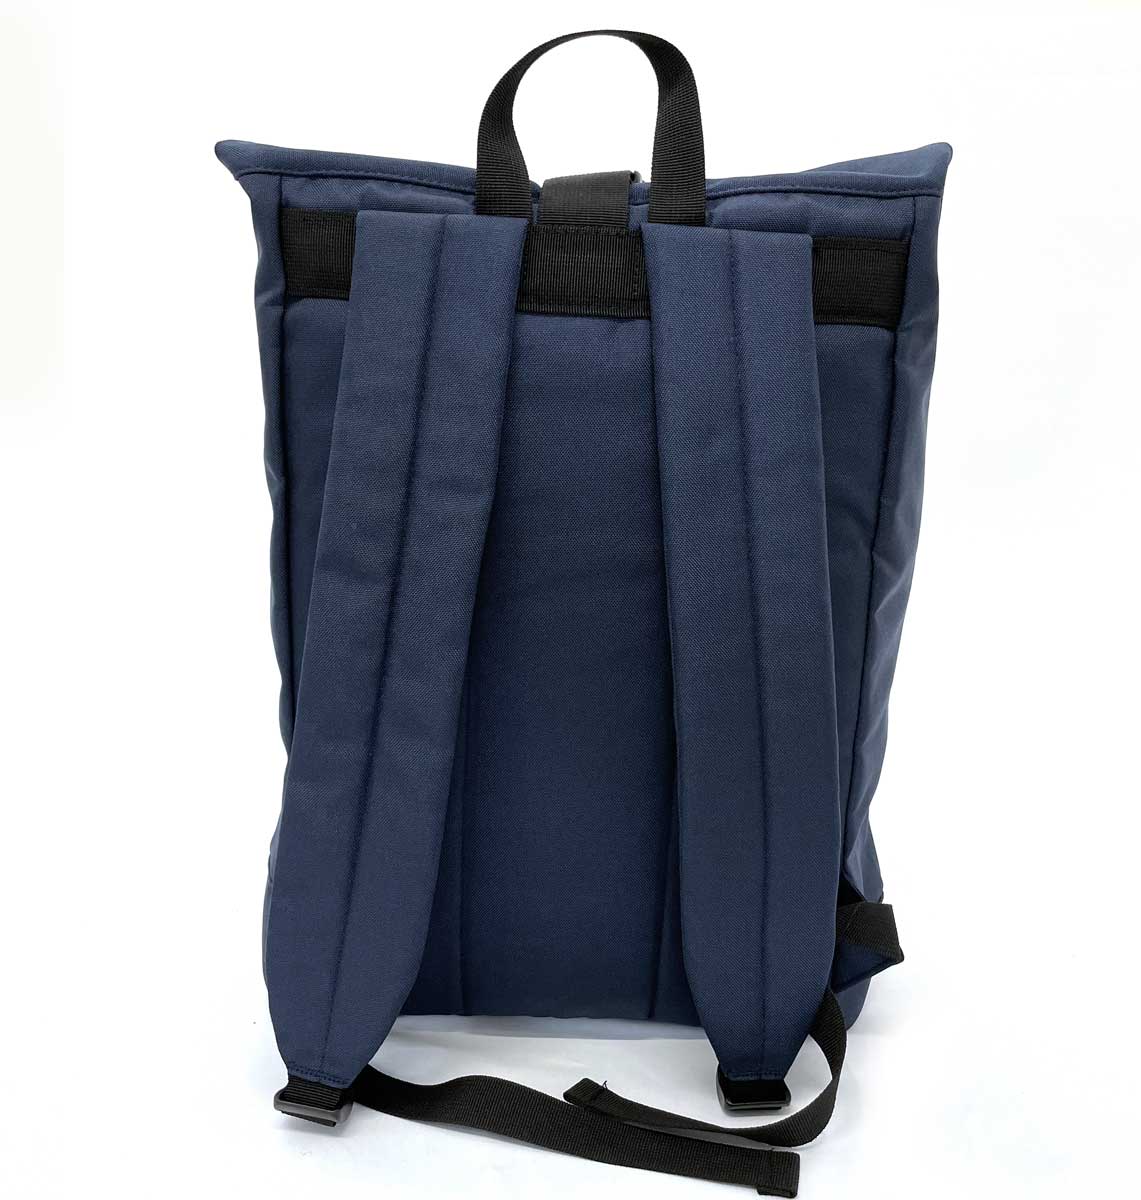 Manta Ray Beach Roll-top Recycled Backpack - Blue Panda